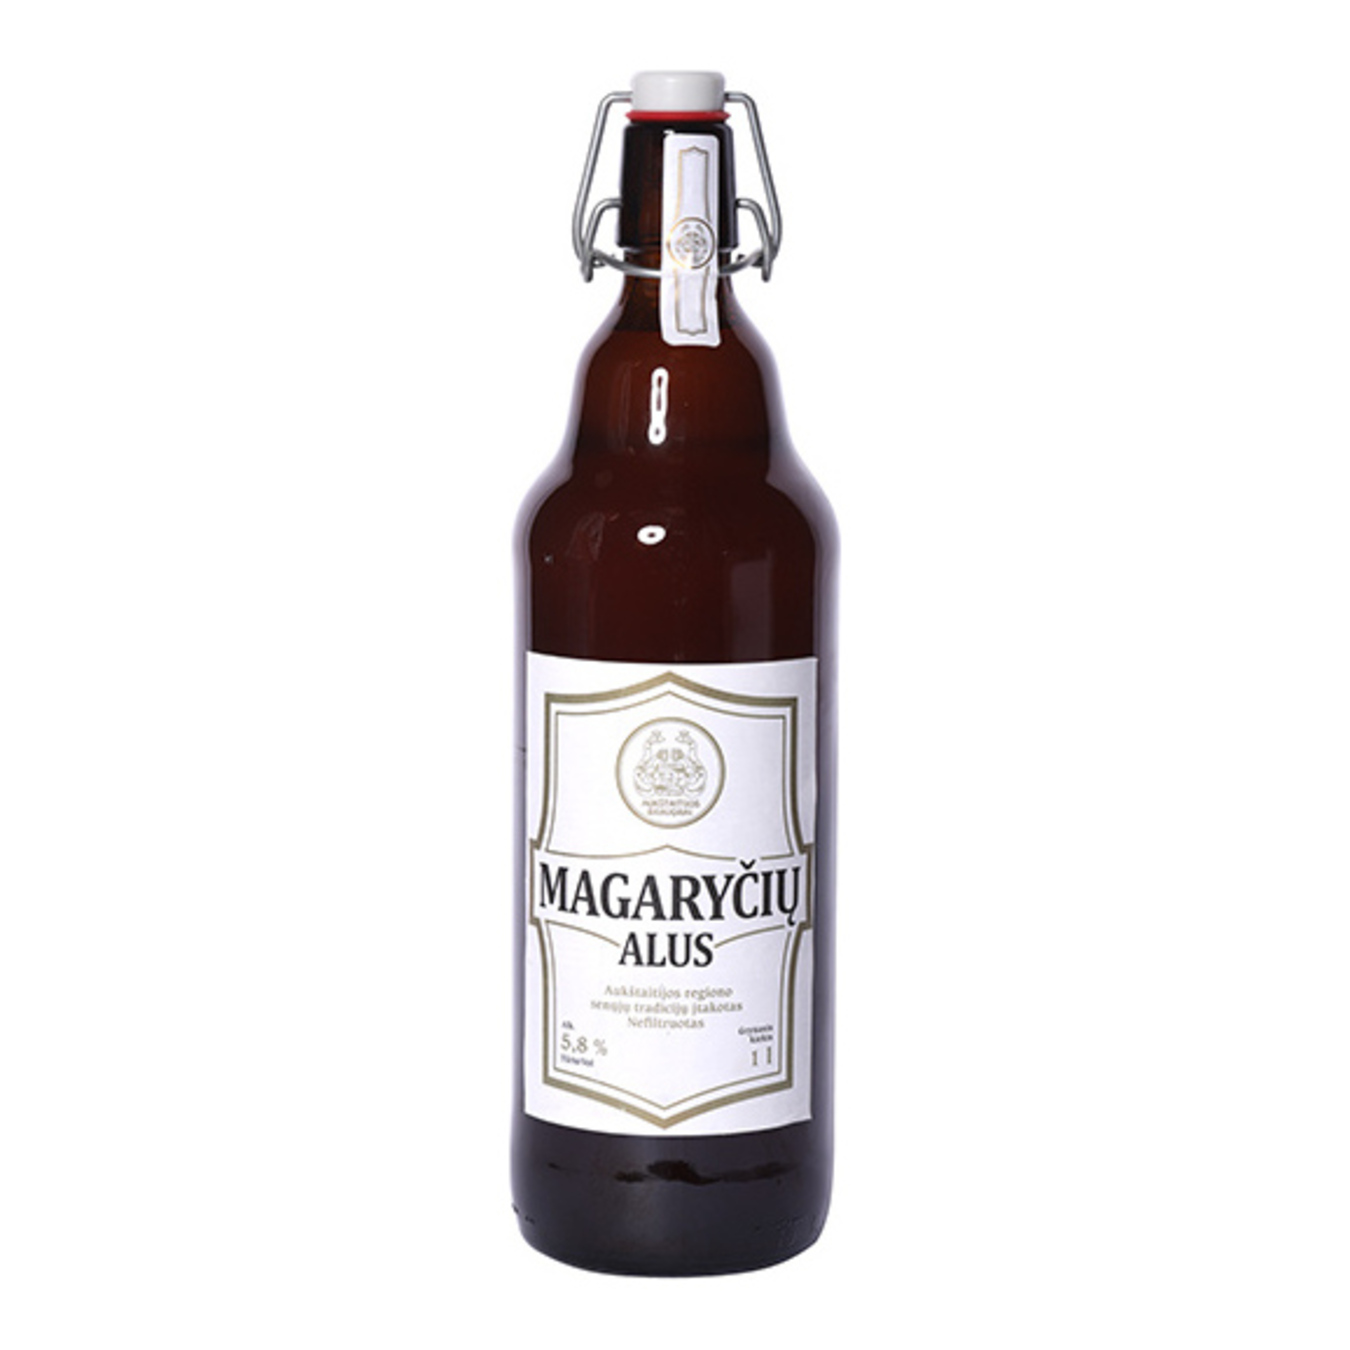 Beer Magaryciu Alus semi-dark unfiltered 5,8% 1l